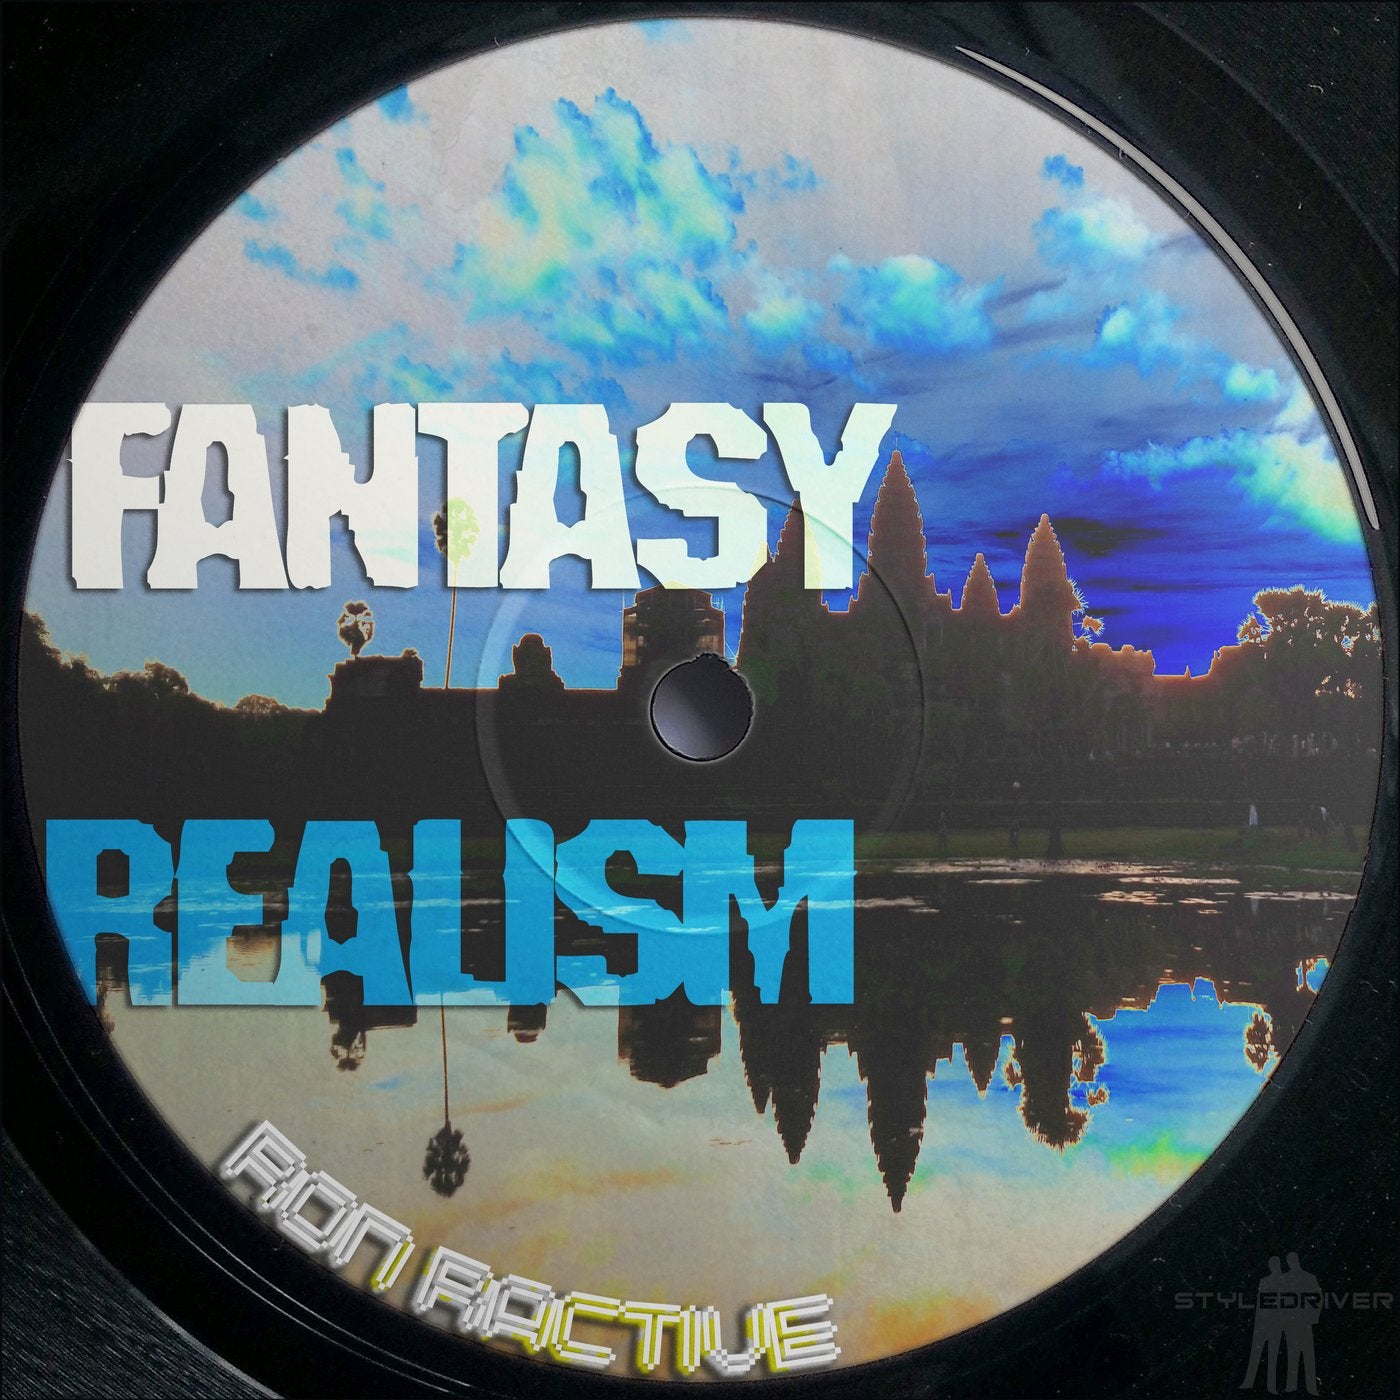 Fantasy Realism